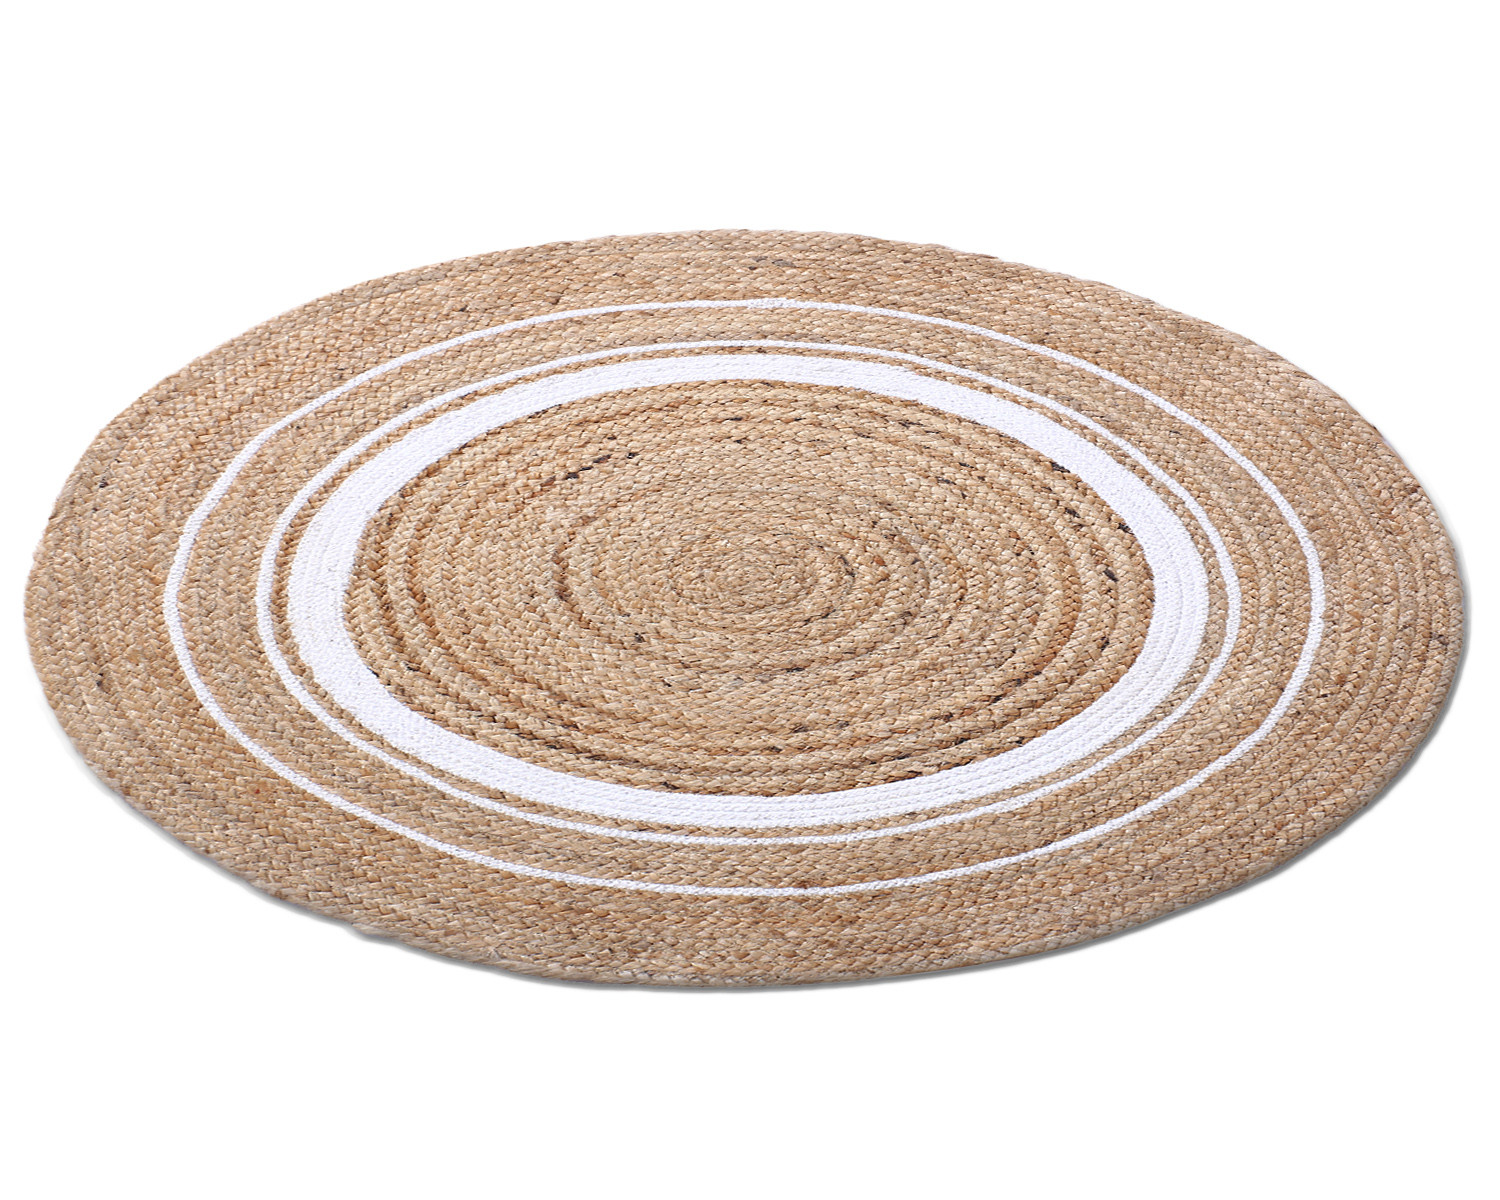 Kuber Industries Hand Woven Braided Carpet Rugs|Non-Slip Round Traditional Spiral Design Jute Door mat|Mat For Bedroom,Living Room,Dining Room,Yoga,71x71 cm,(White)